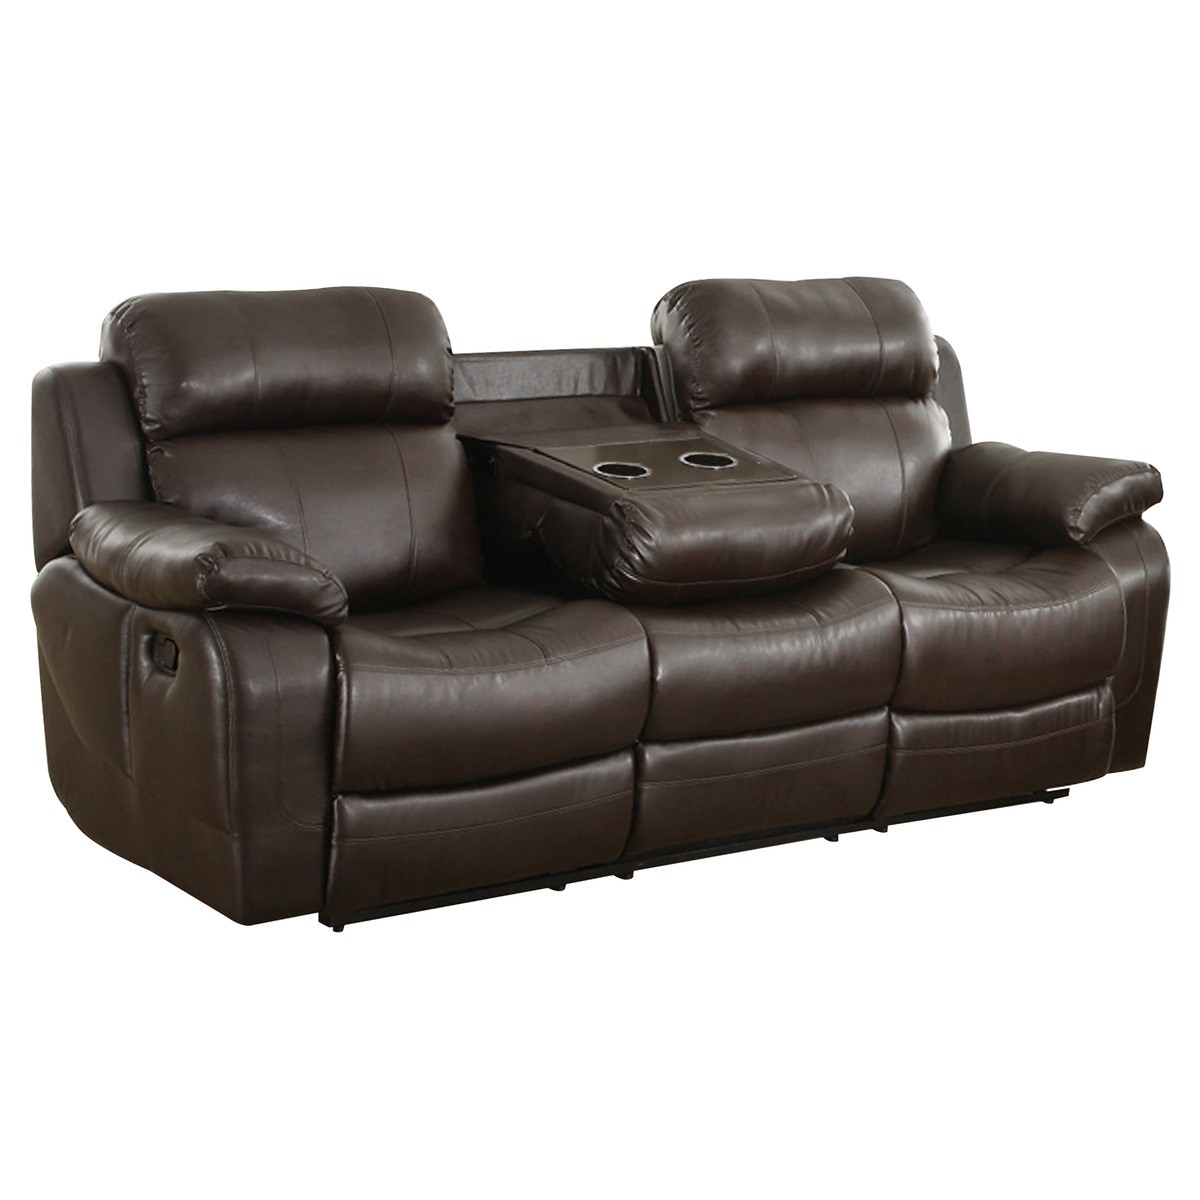 Eland Brown Cupholder Recliner Sofa